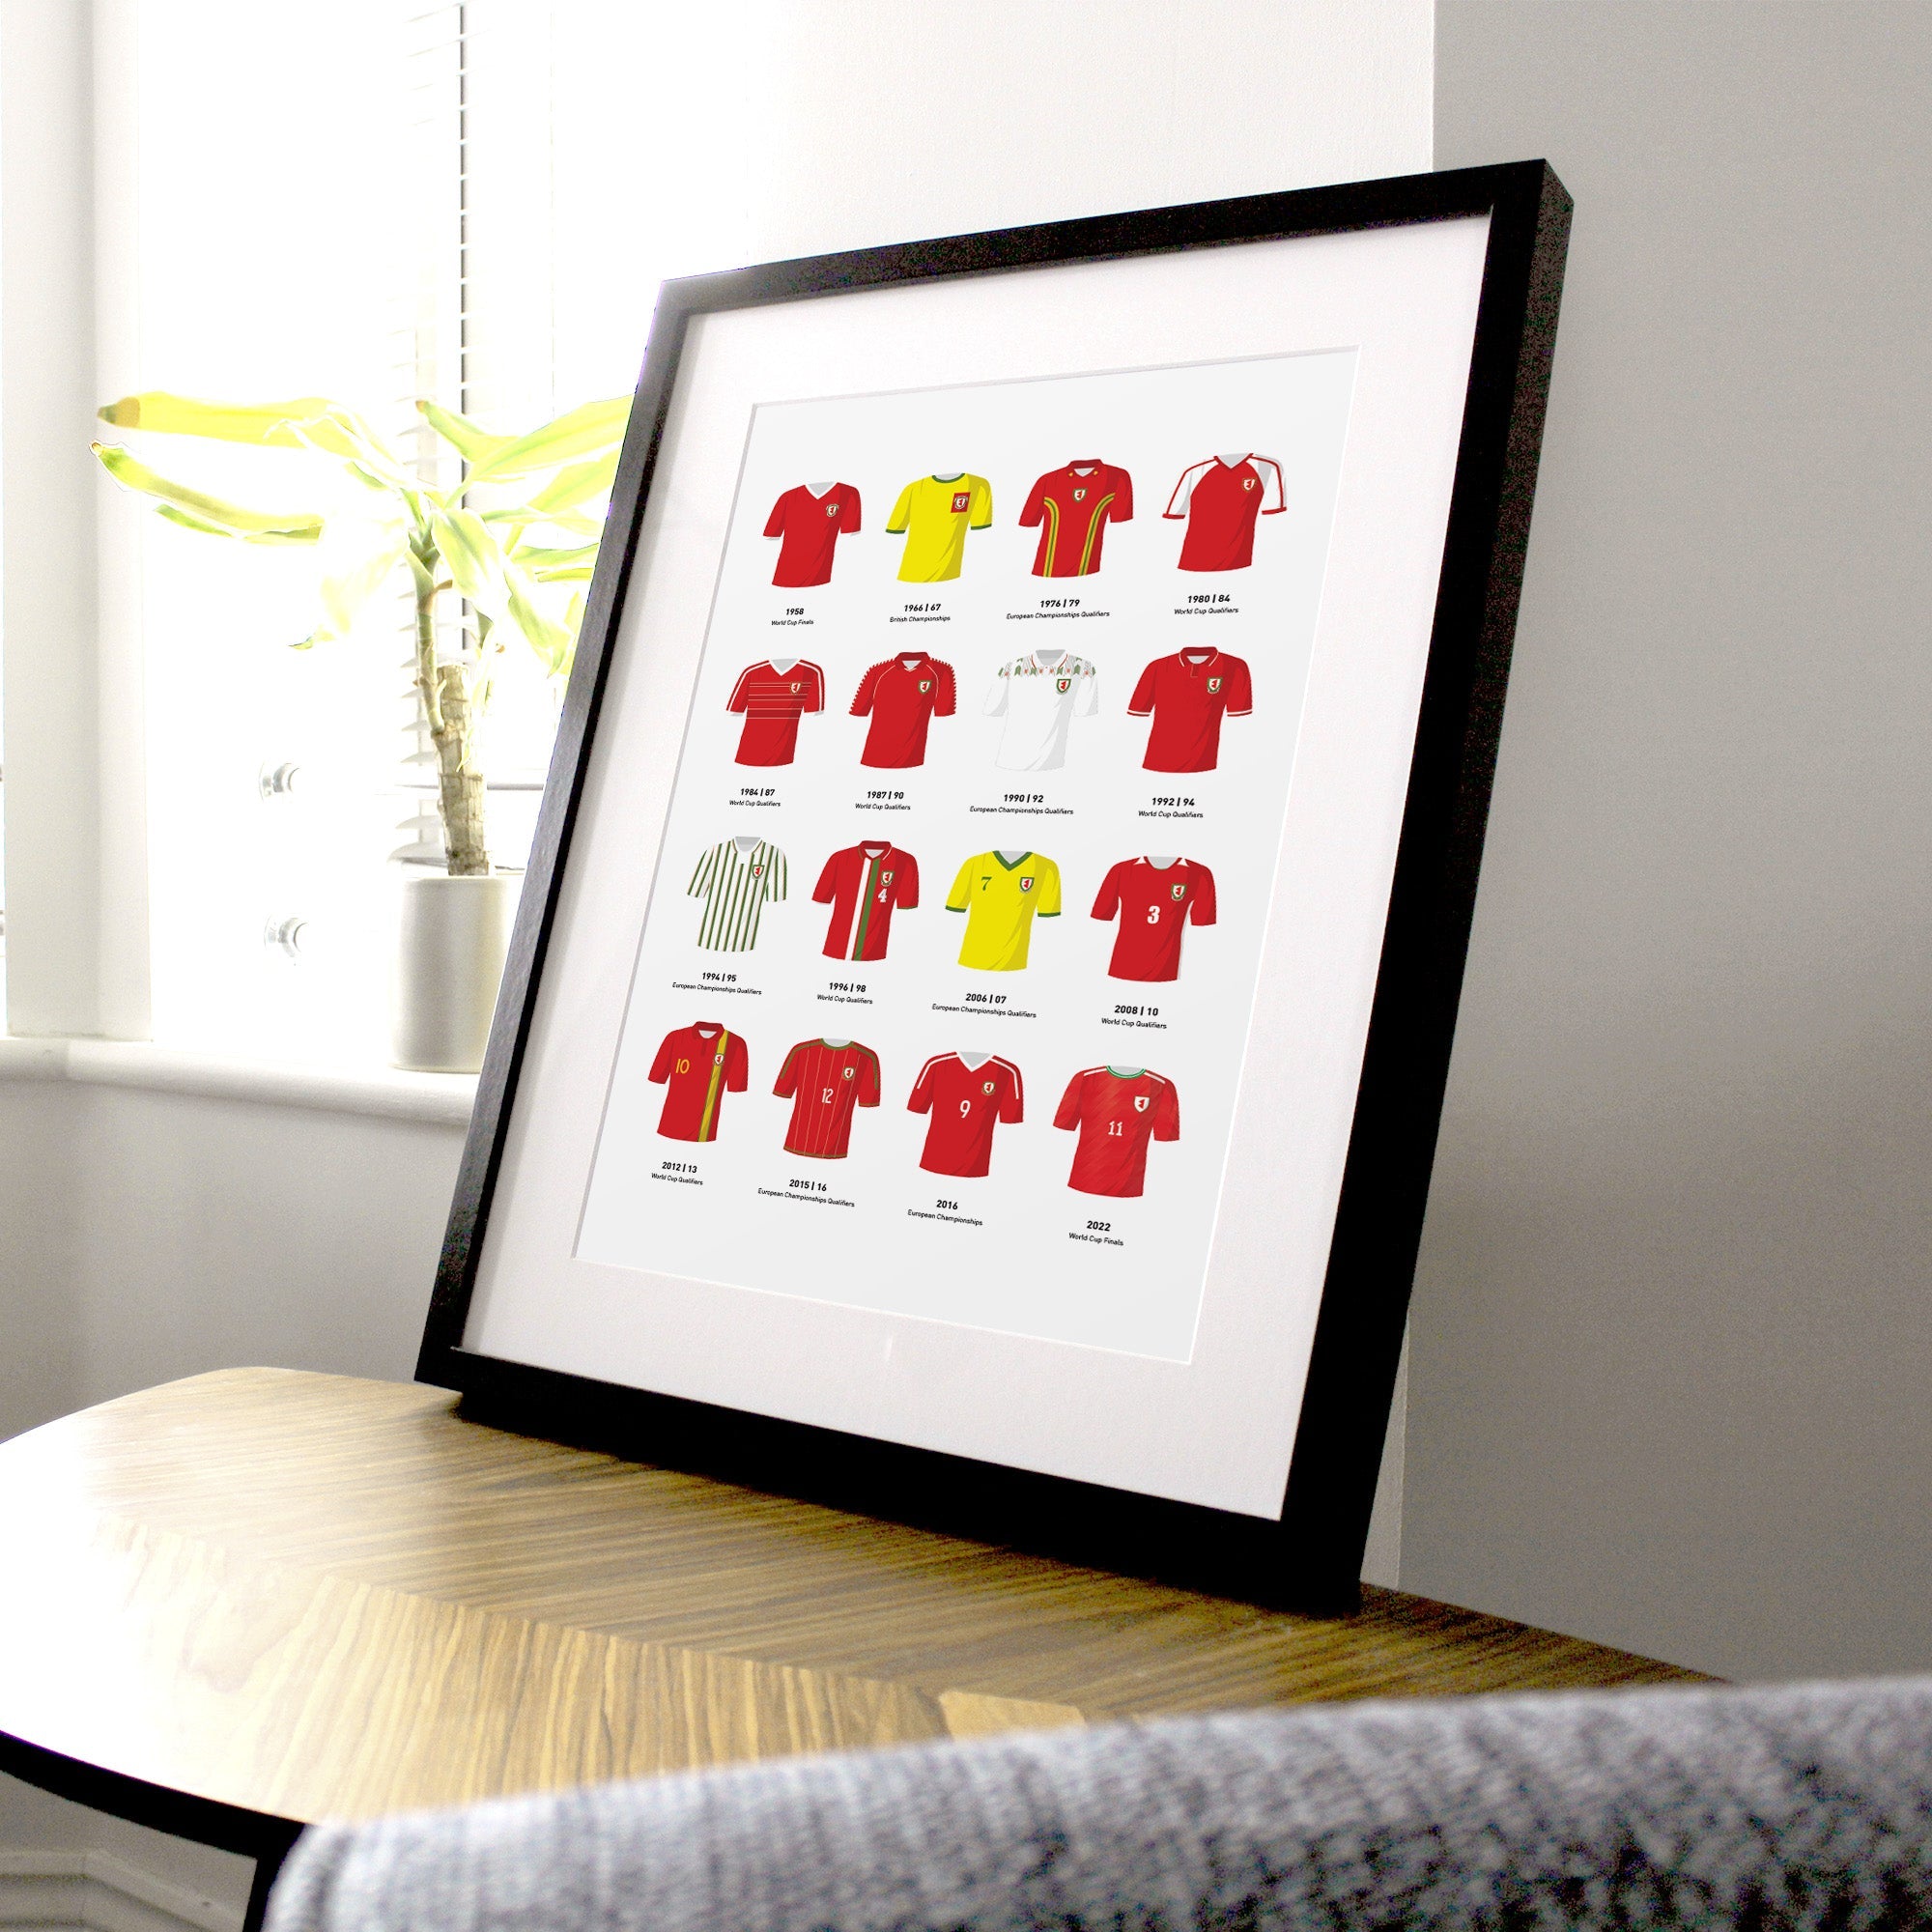 Wales Classic Kits Football Team Print Good Team On Paper